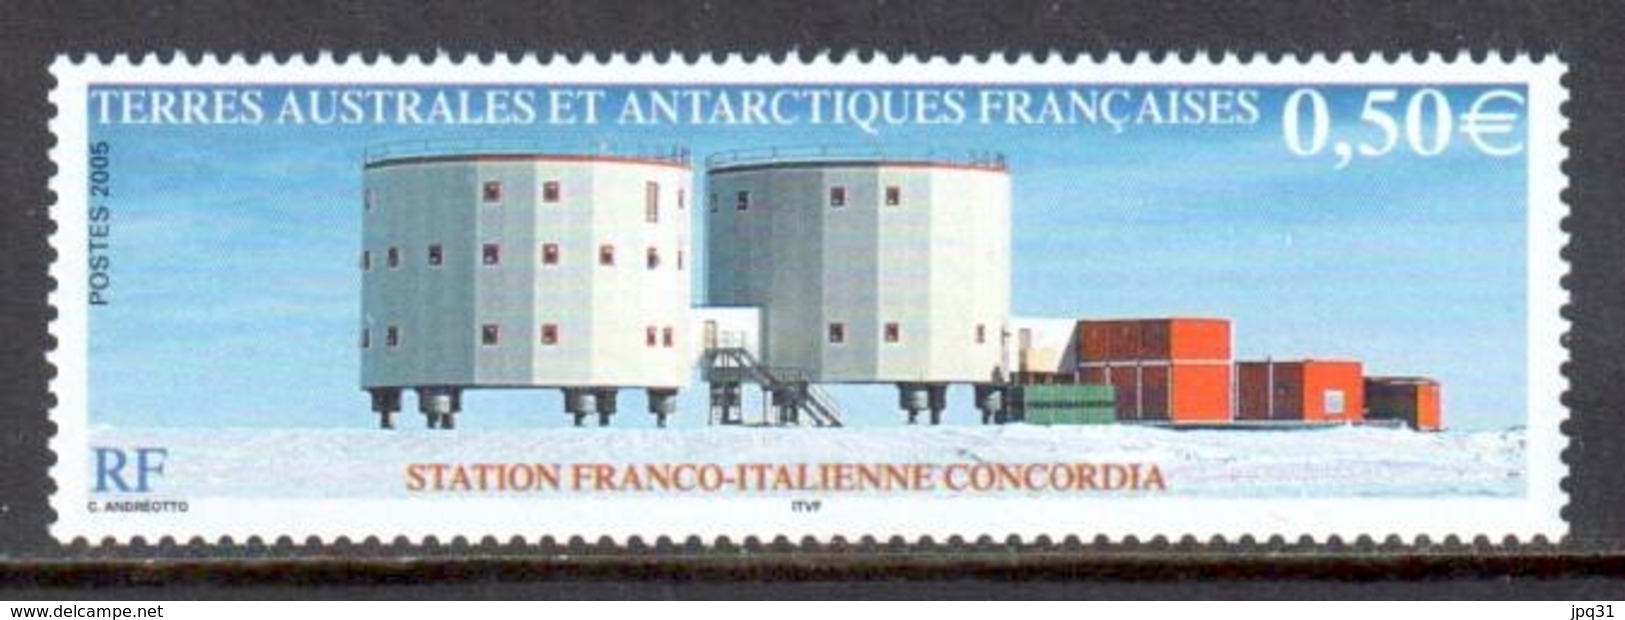 TAAF - 2005 - Station Franco-italienne Concordia ** - Neufs